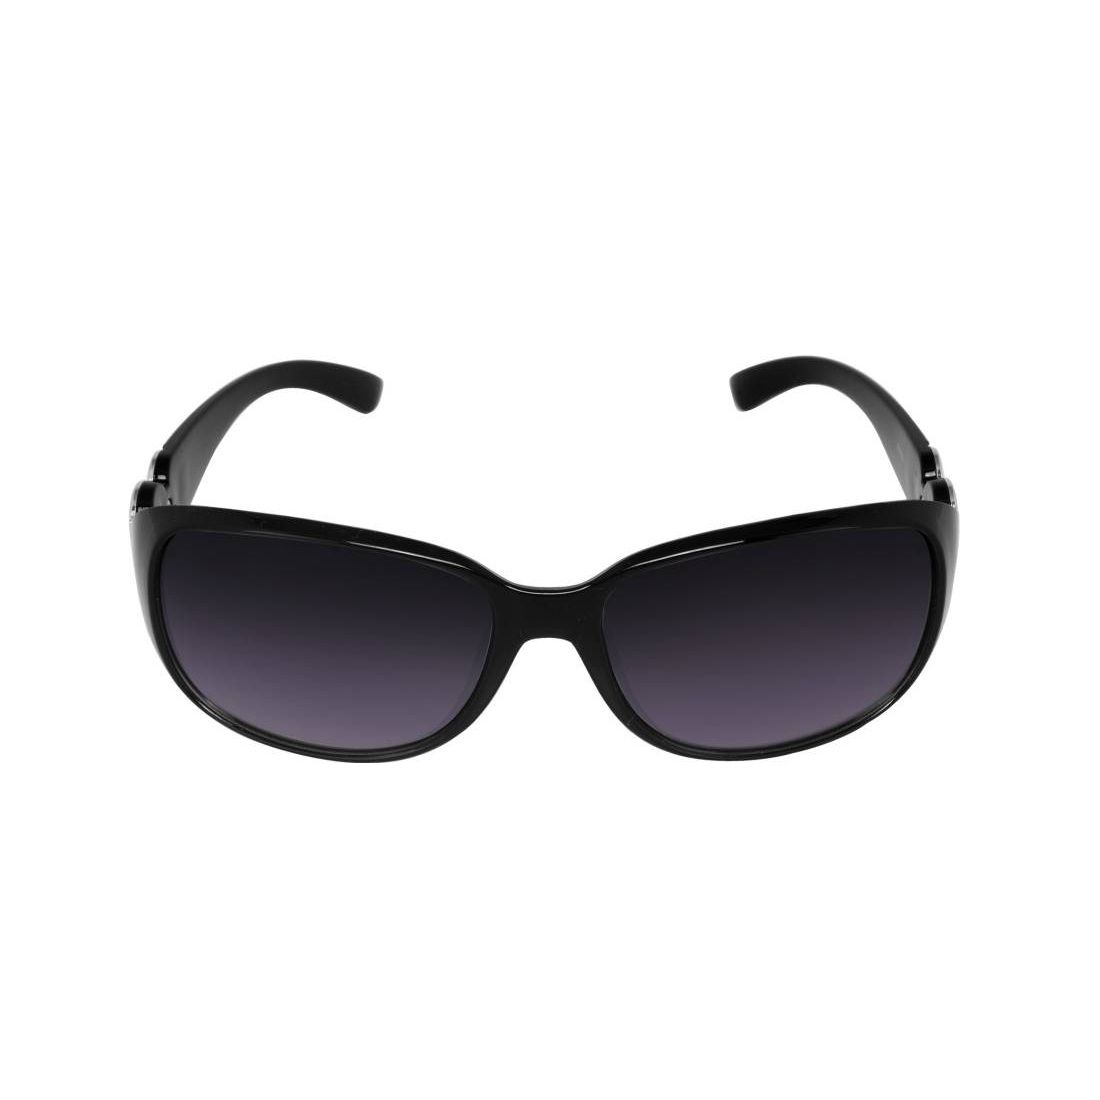 Joe Louis Black Oversized Sunglasses ( JLS17 ) - Buy Joe Louis Black Oversized Sunglasses ...